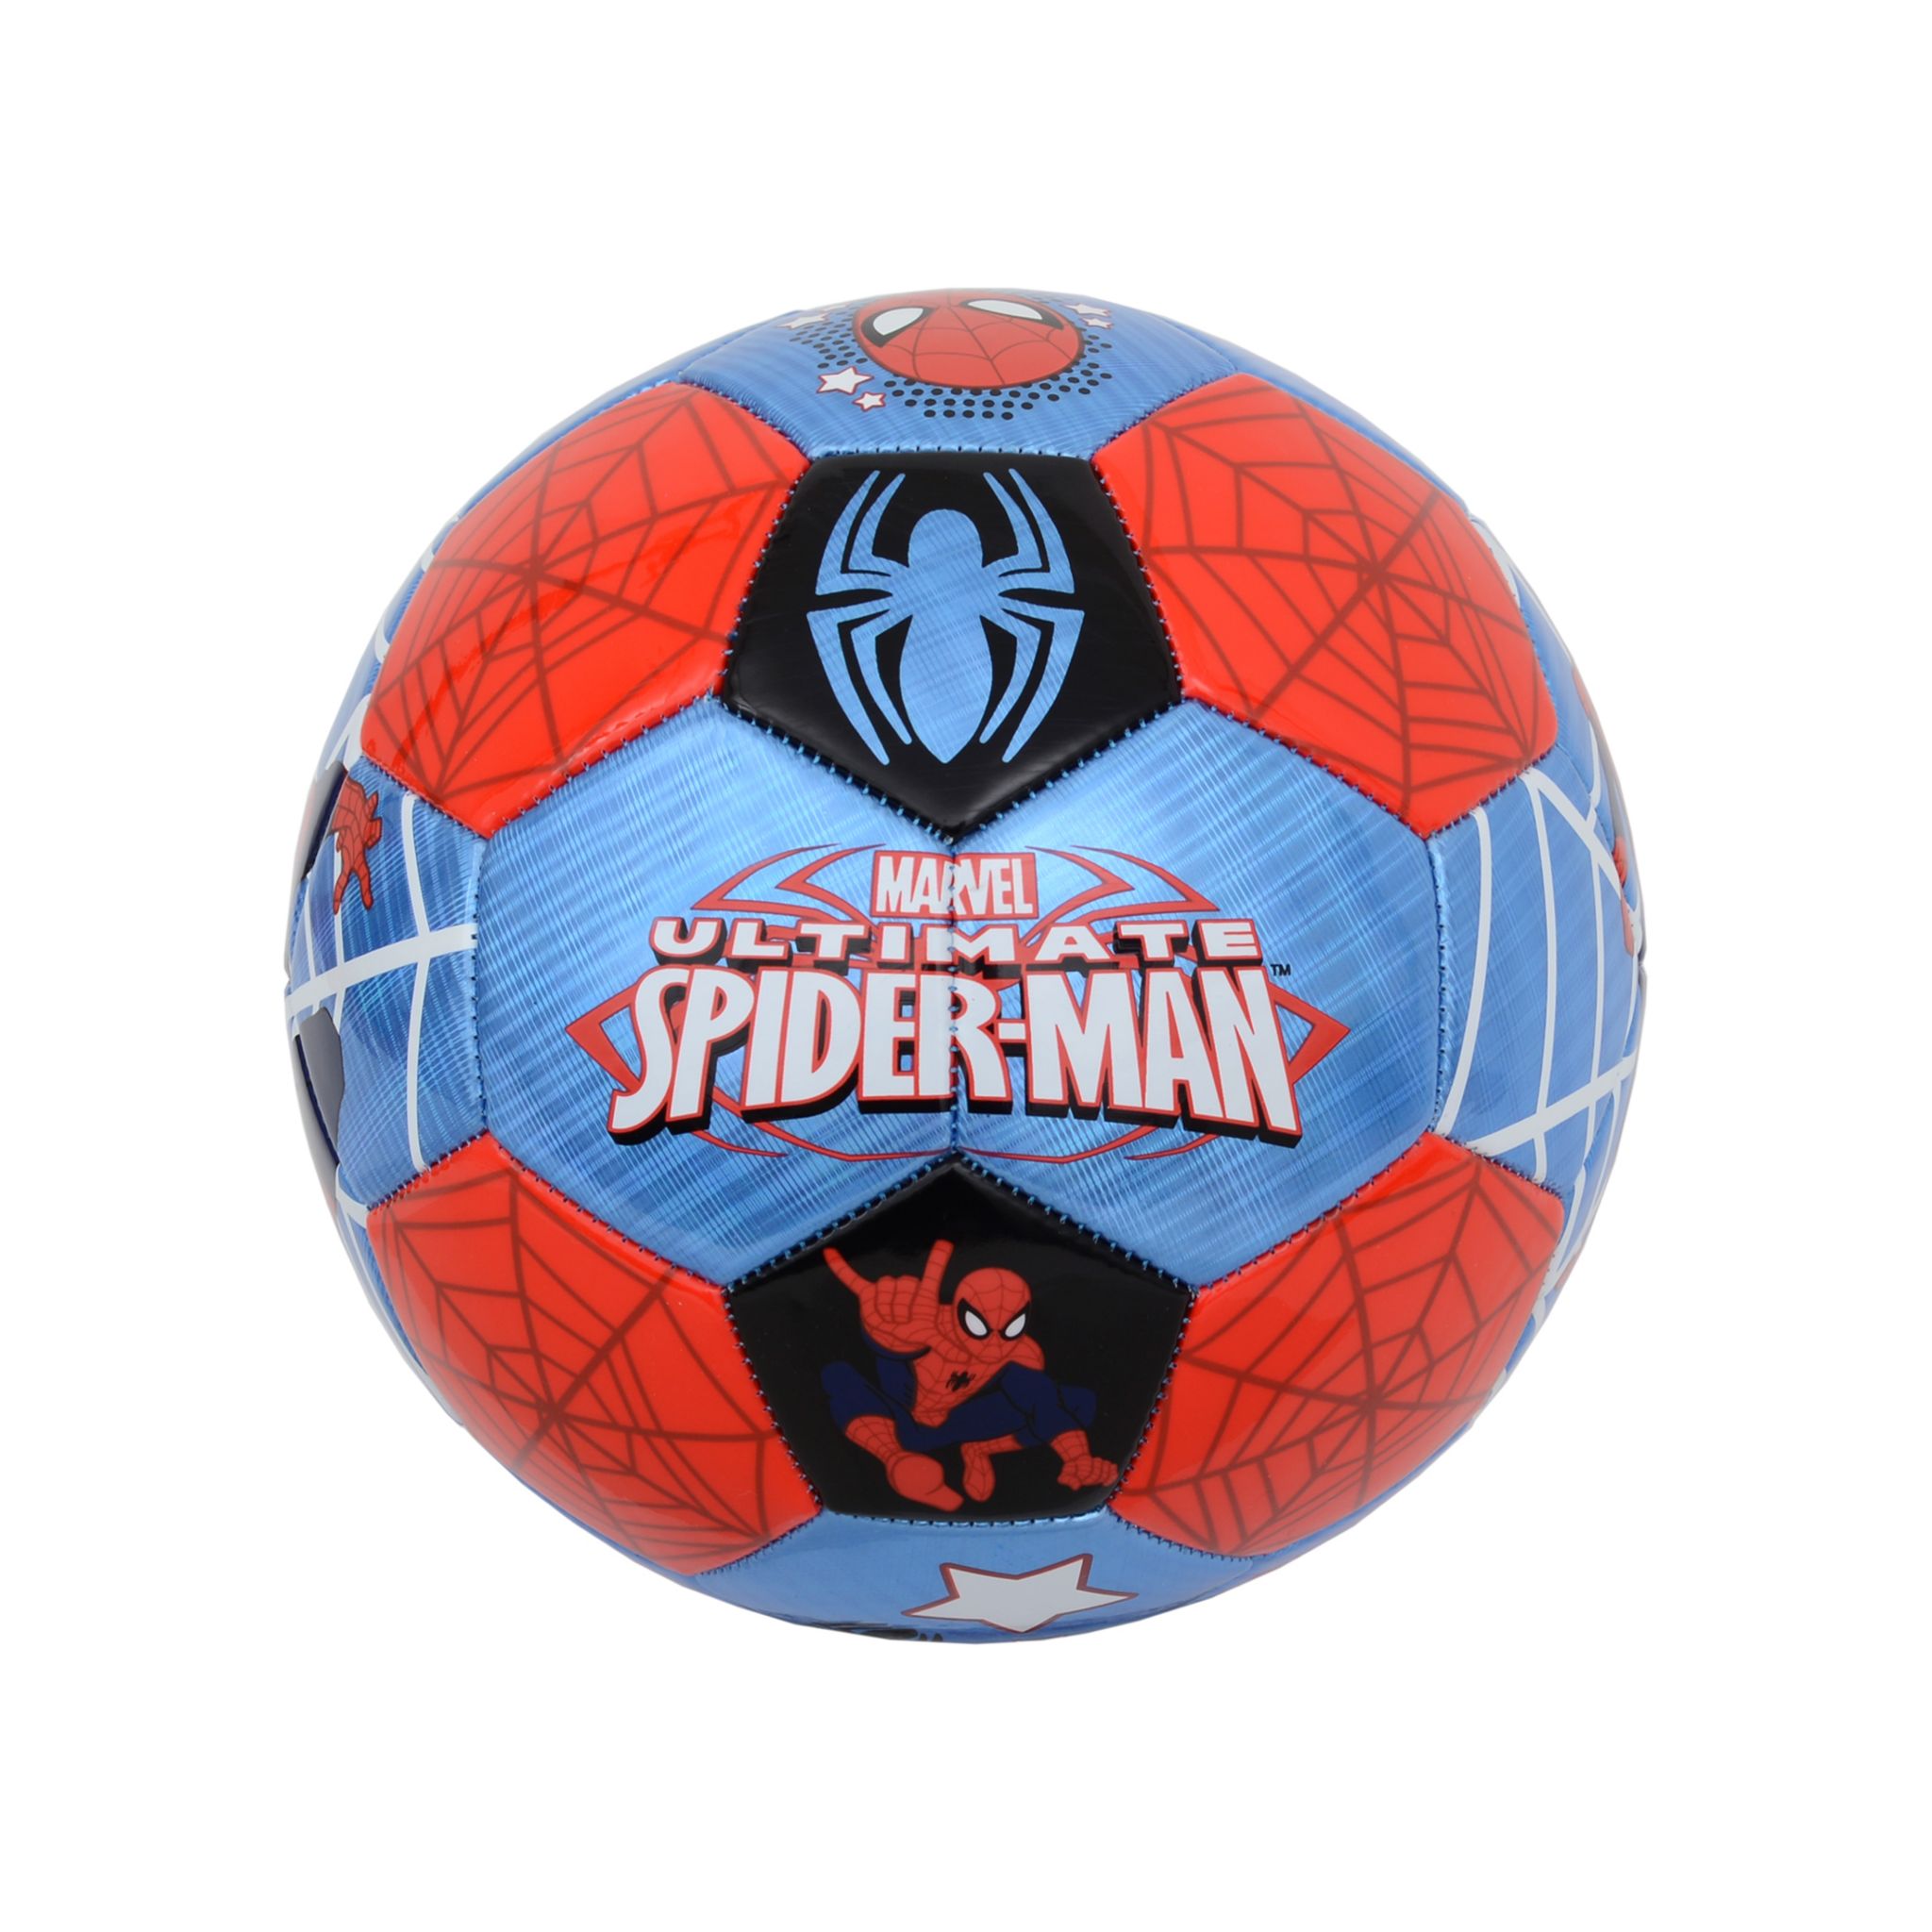 SPIDERMAN Ballon Spiderman Taille 4 pas cher 